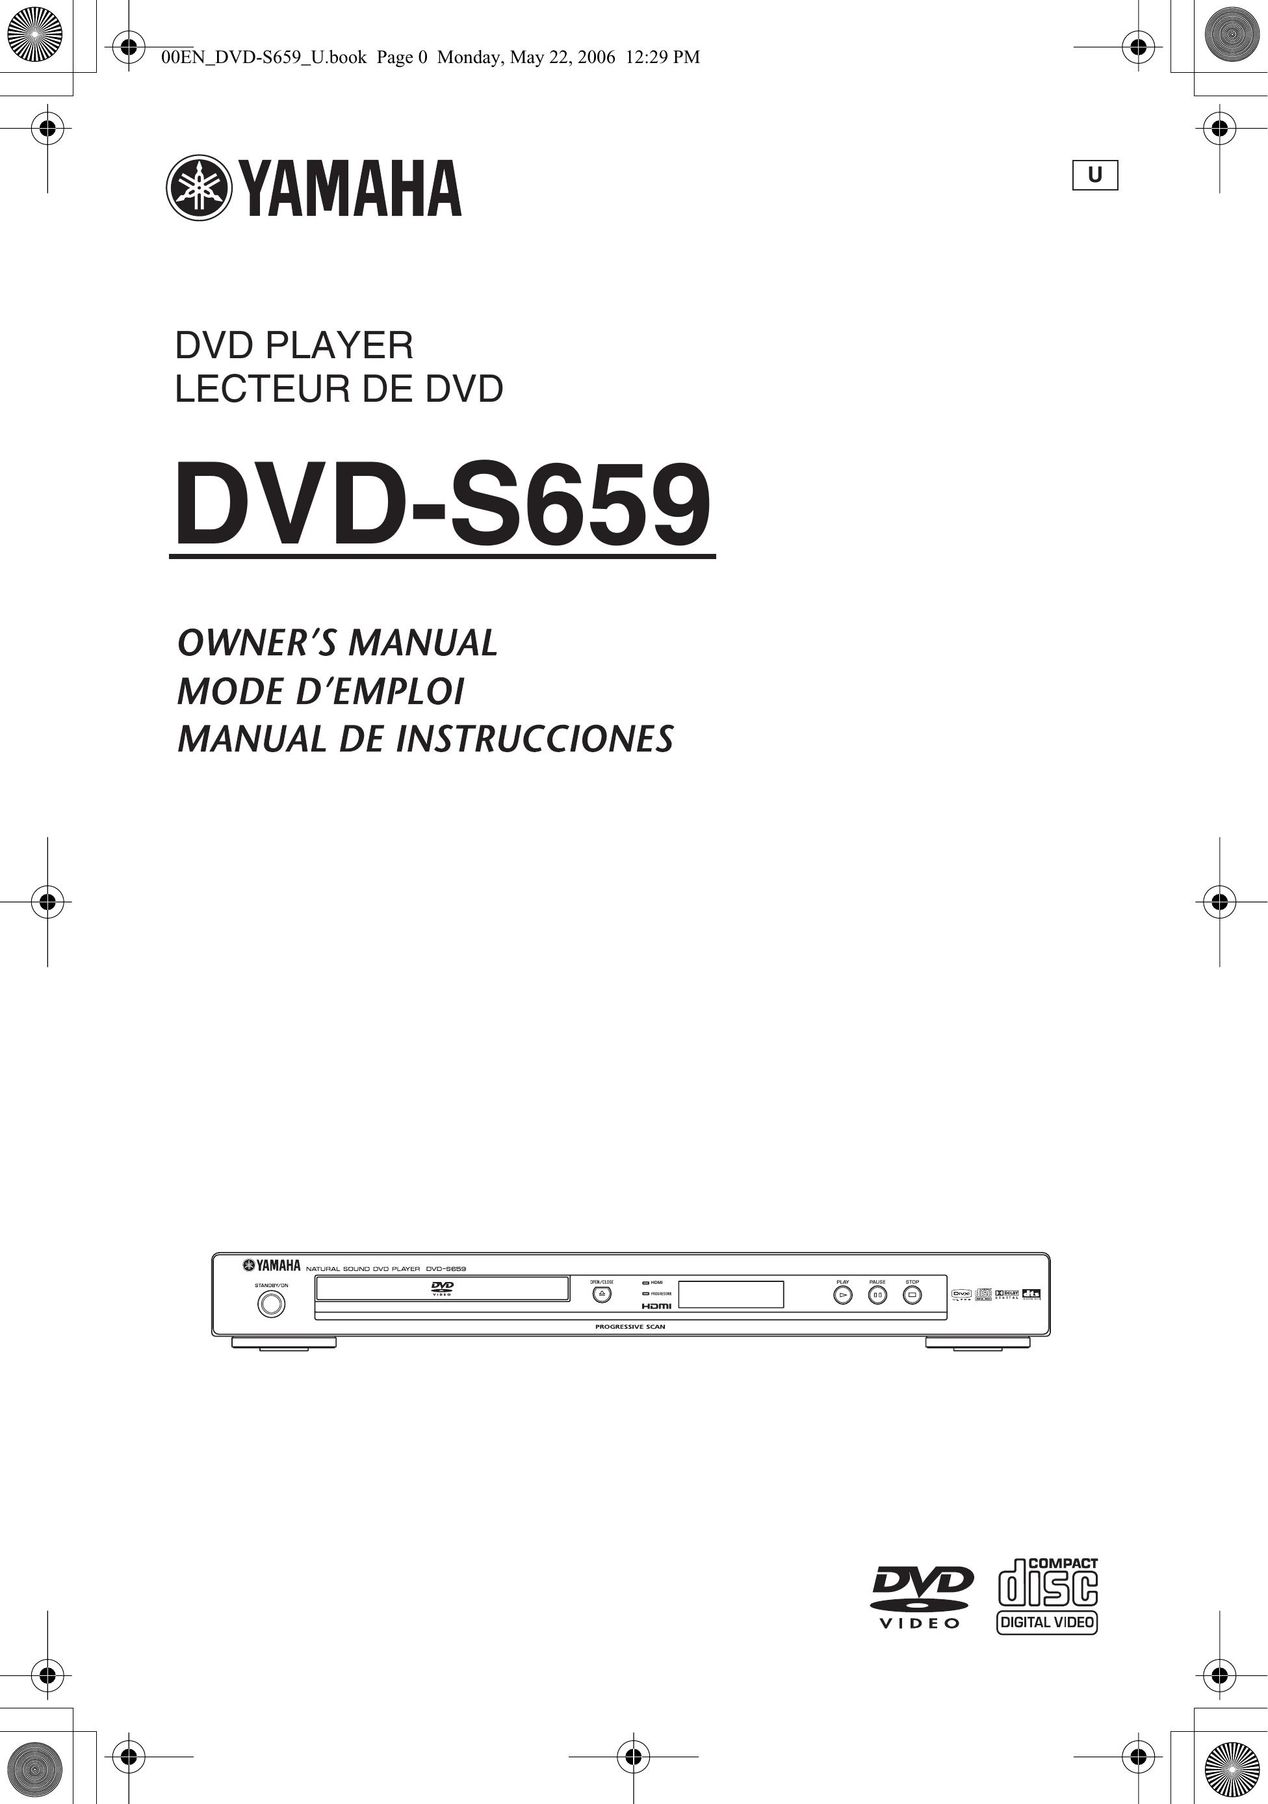 Yamaha DVD-S659BL DVD Player User Manual